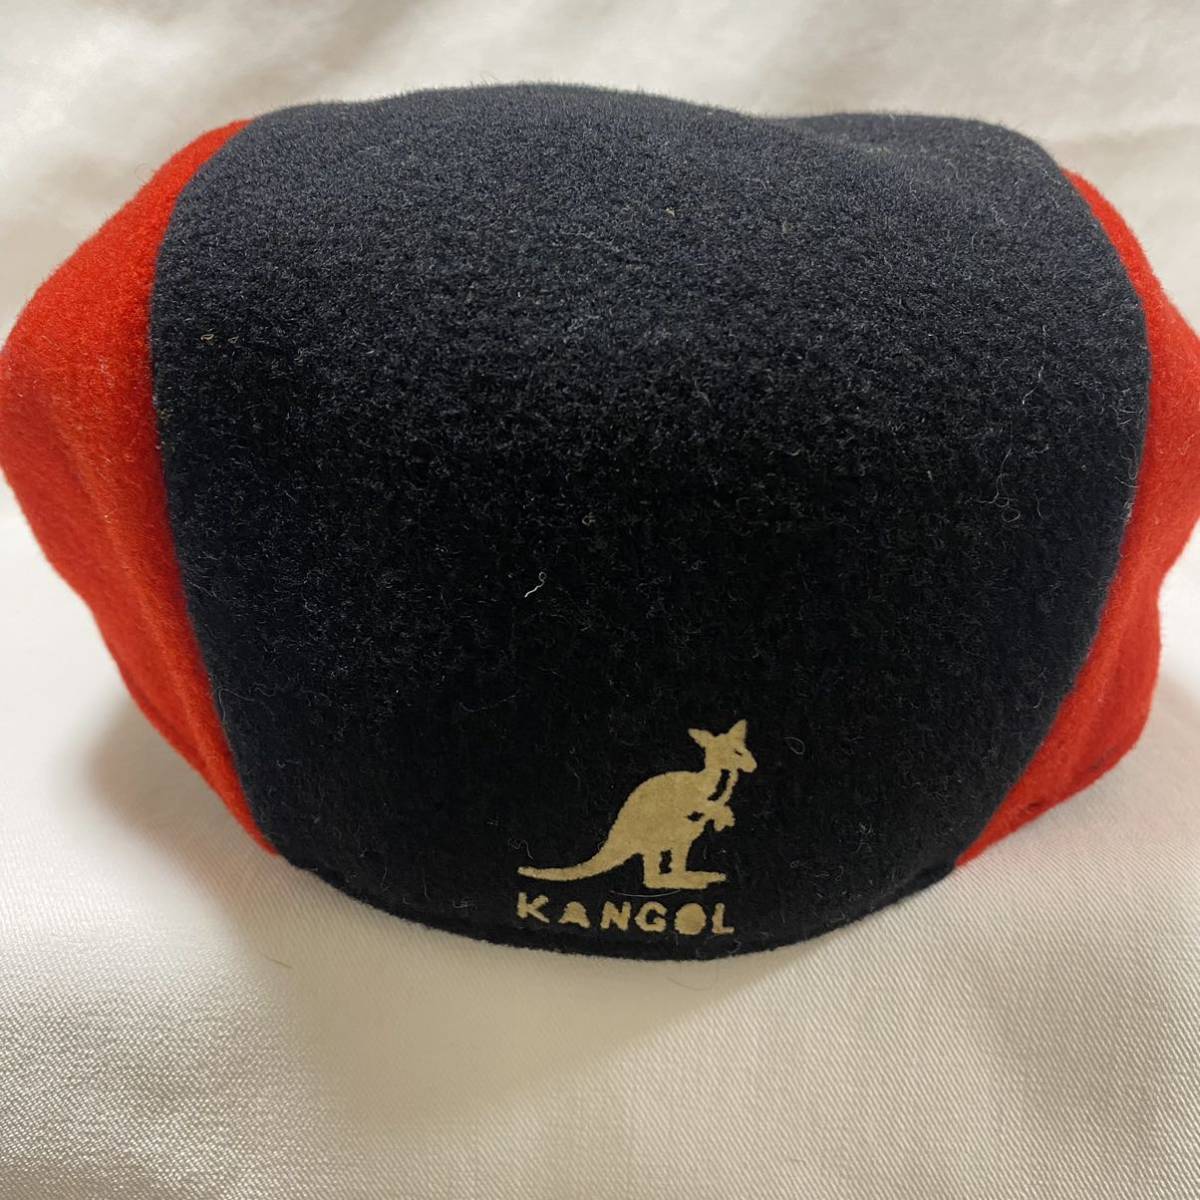  Kangol кепка hunting cap красный чёрный редкость kangol шляпа Англия производства made in England 80s 90s vintage old school run dmc cazal adidas wild style